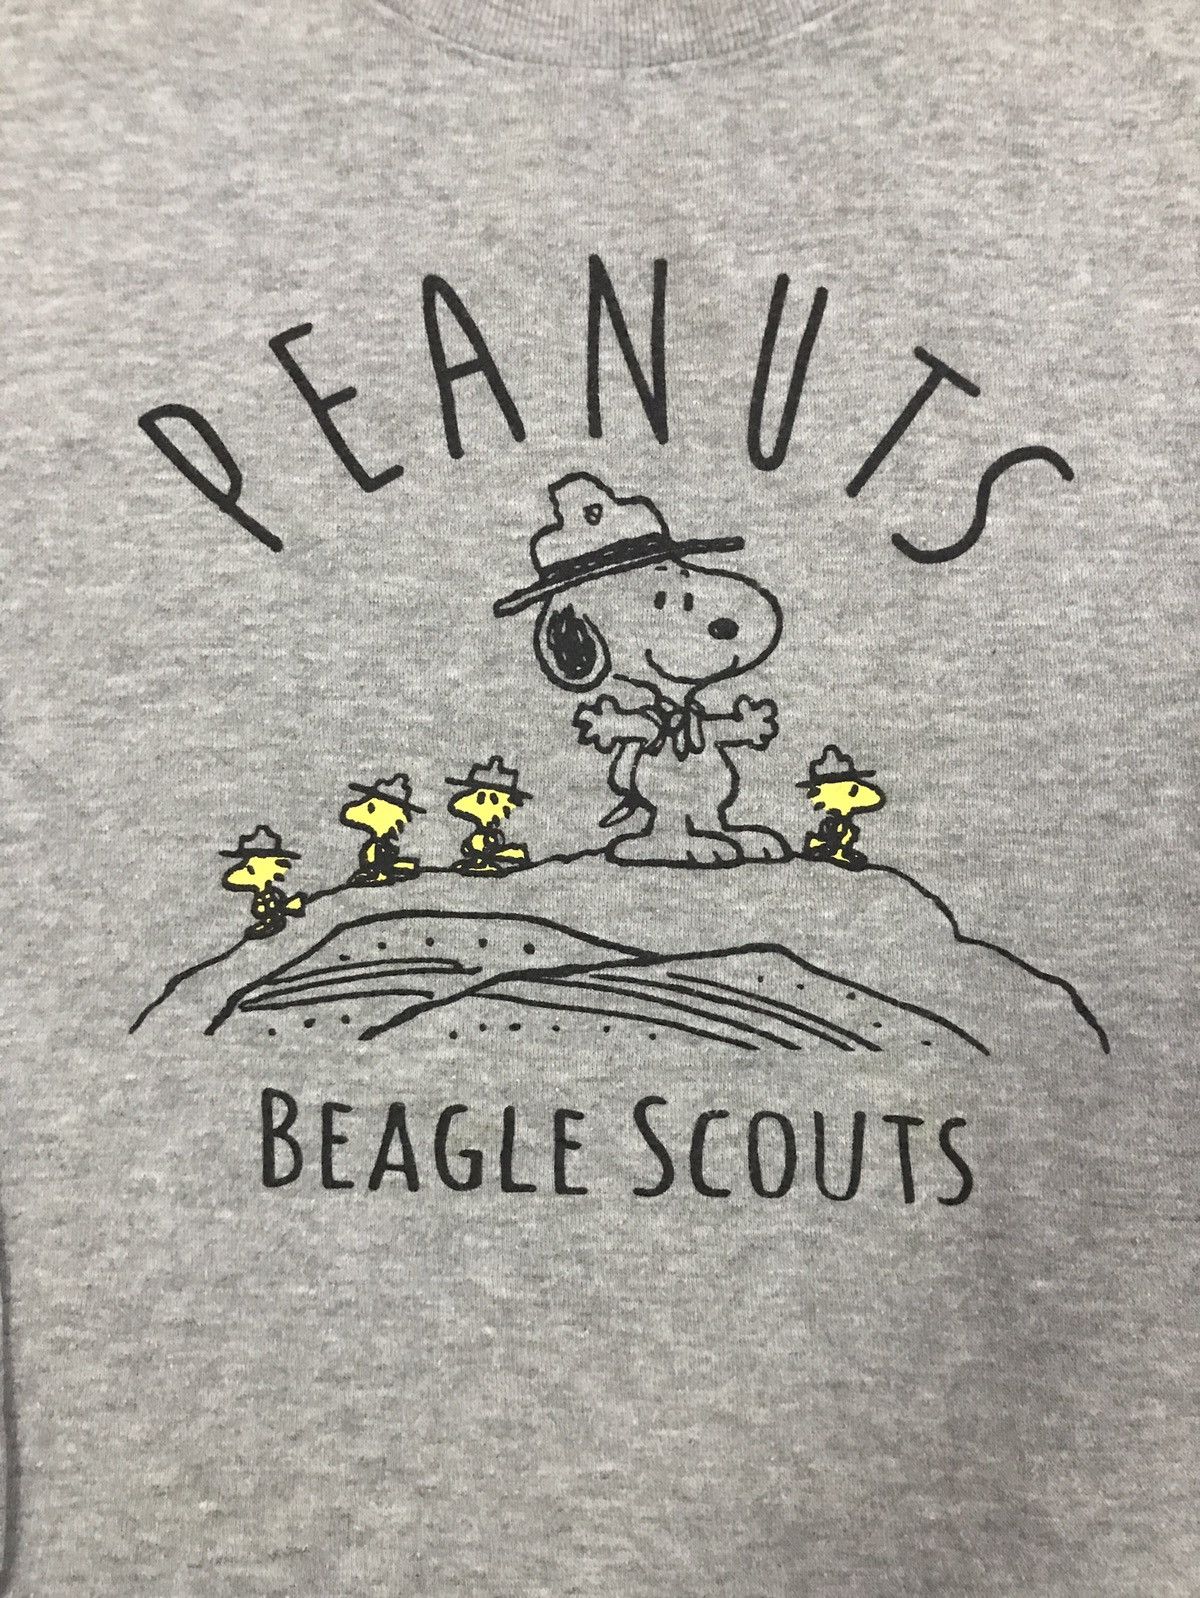 Peanuts Vintage Peanuts Sweatshirt Size US S / EU 44-46 / 1 - 4 Preview